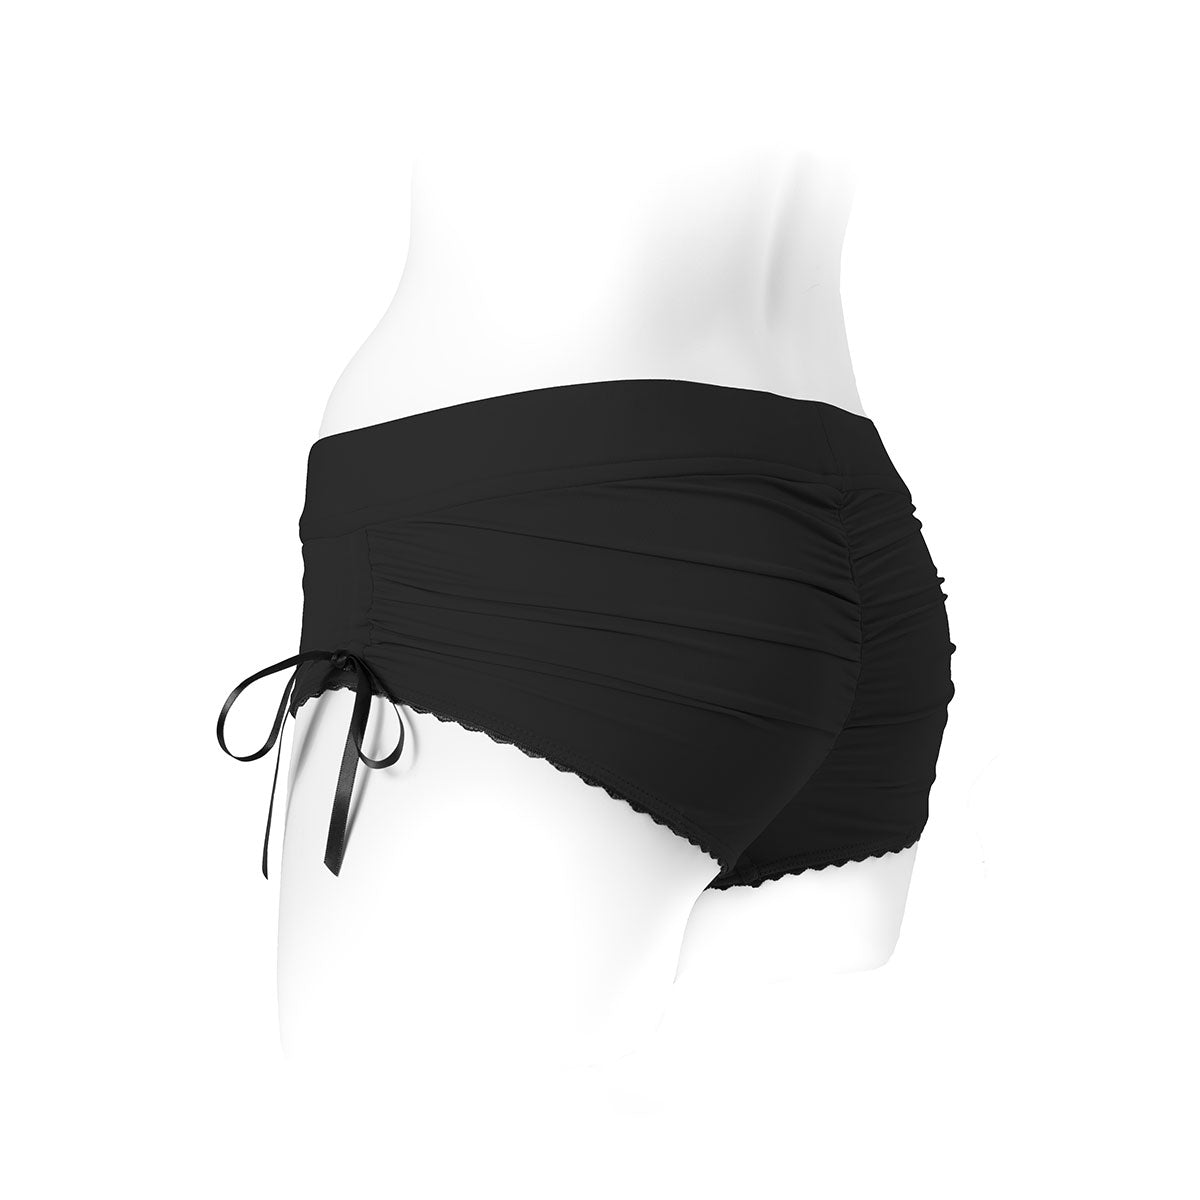 SpareParts Sasha Harness Black-Black Nylon - Medium Intimates Adult Boutique